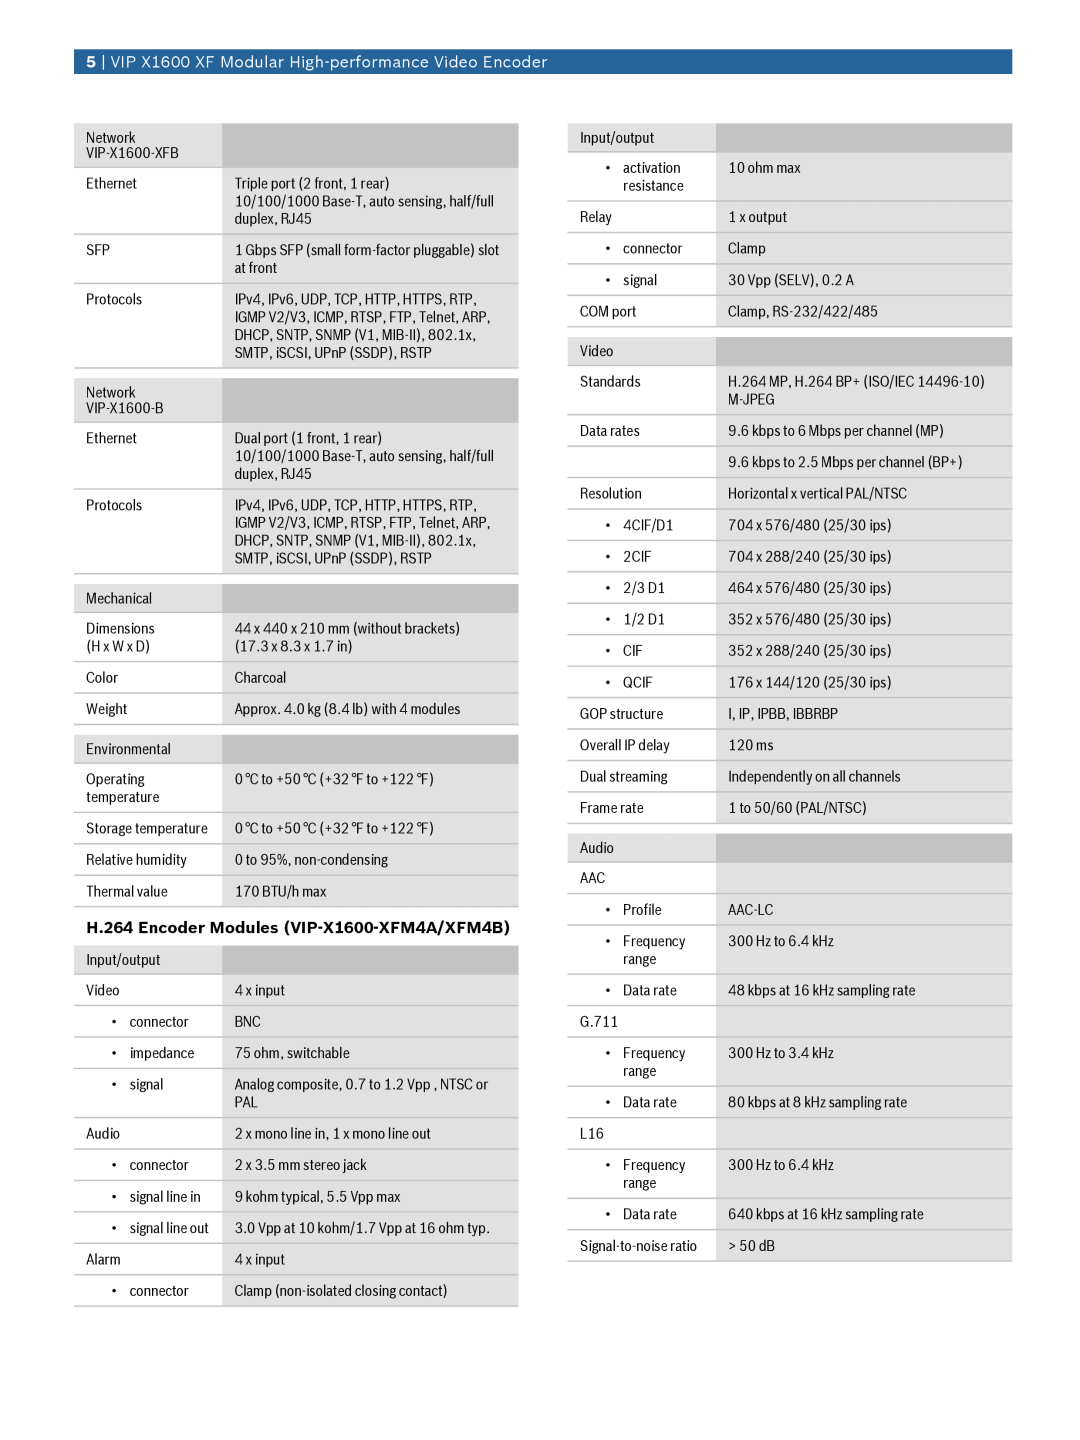 Bosch Appliances manual H.264 Encoder Modules VIP‑X1600‑XFM4A/XFM4B 